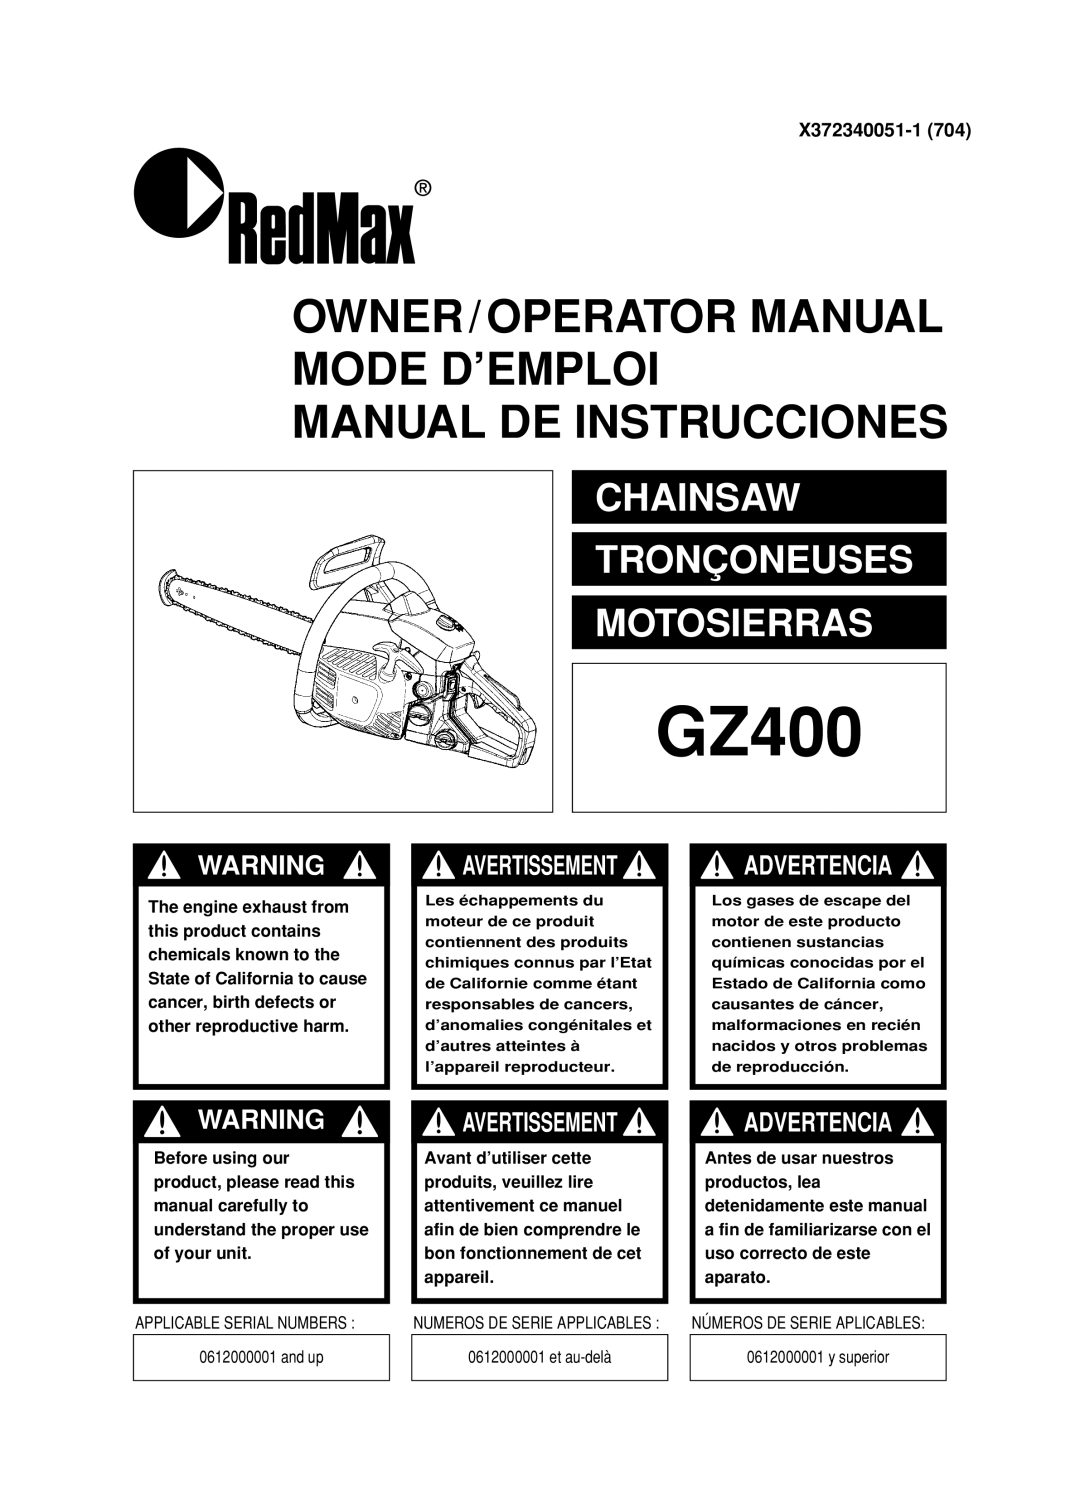 Zenoah GZ400 manual Owner/Operator Manual Mode D’Emploi Manual De Instrucciones, Chainsaw Tronçoneuses Motosierras 